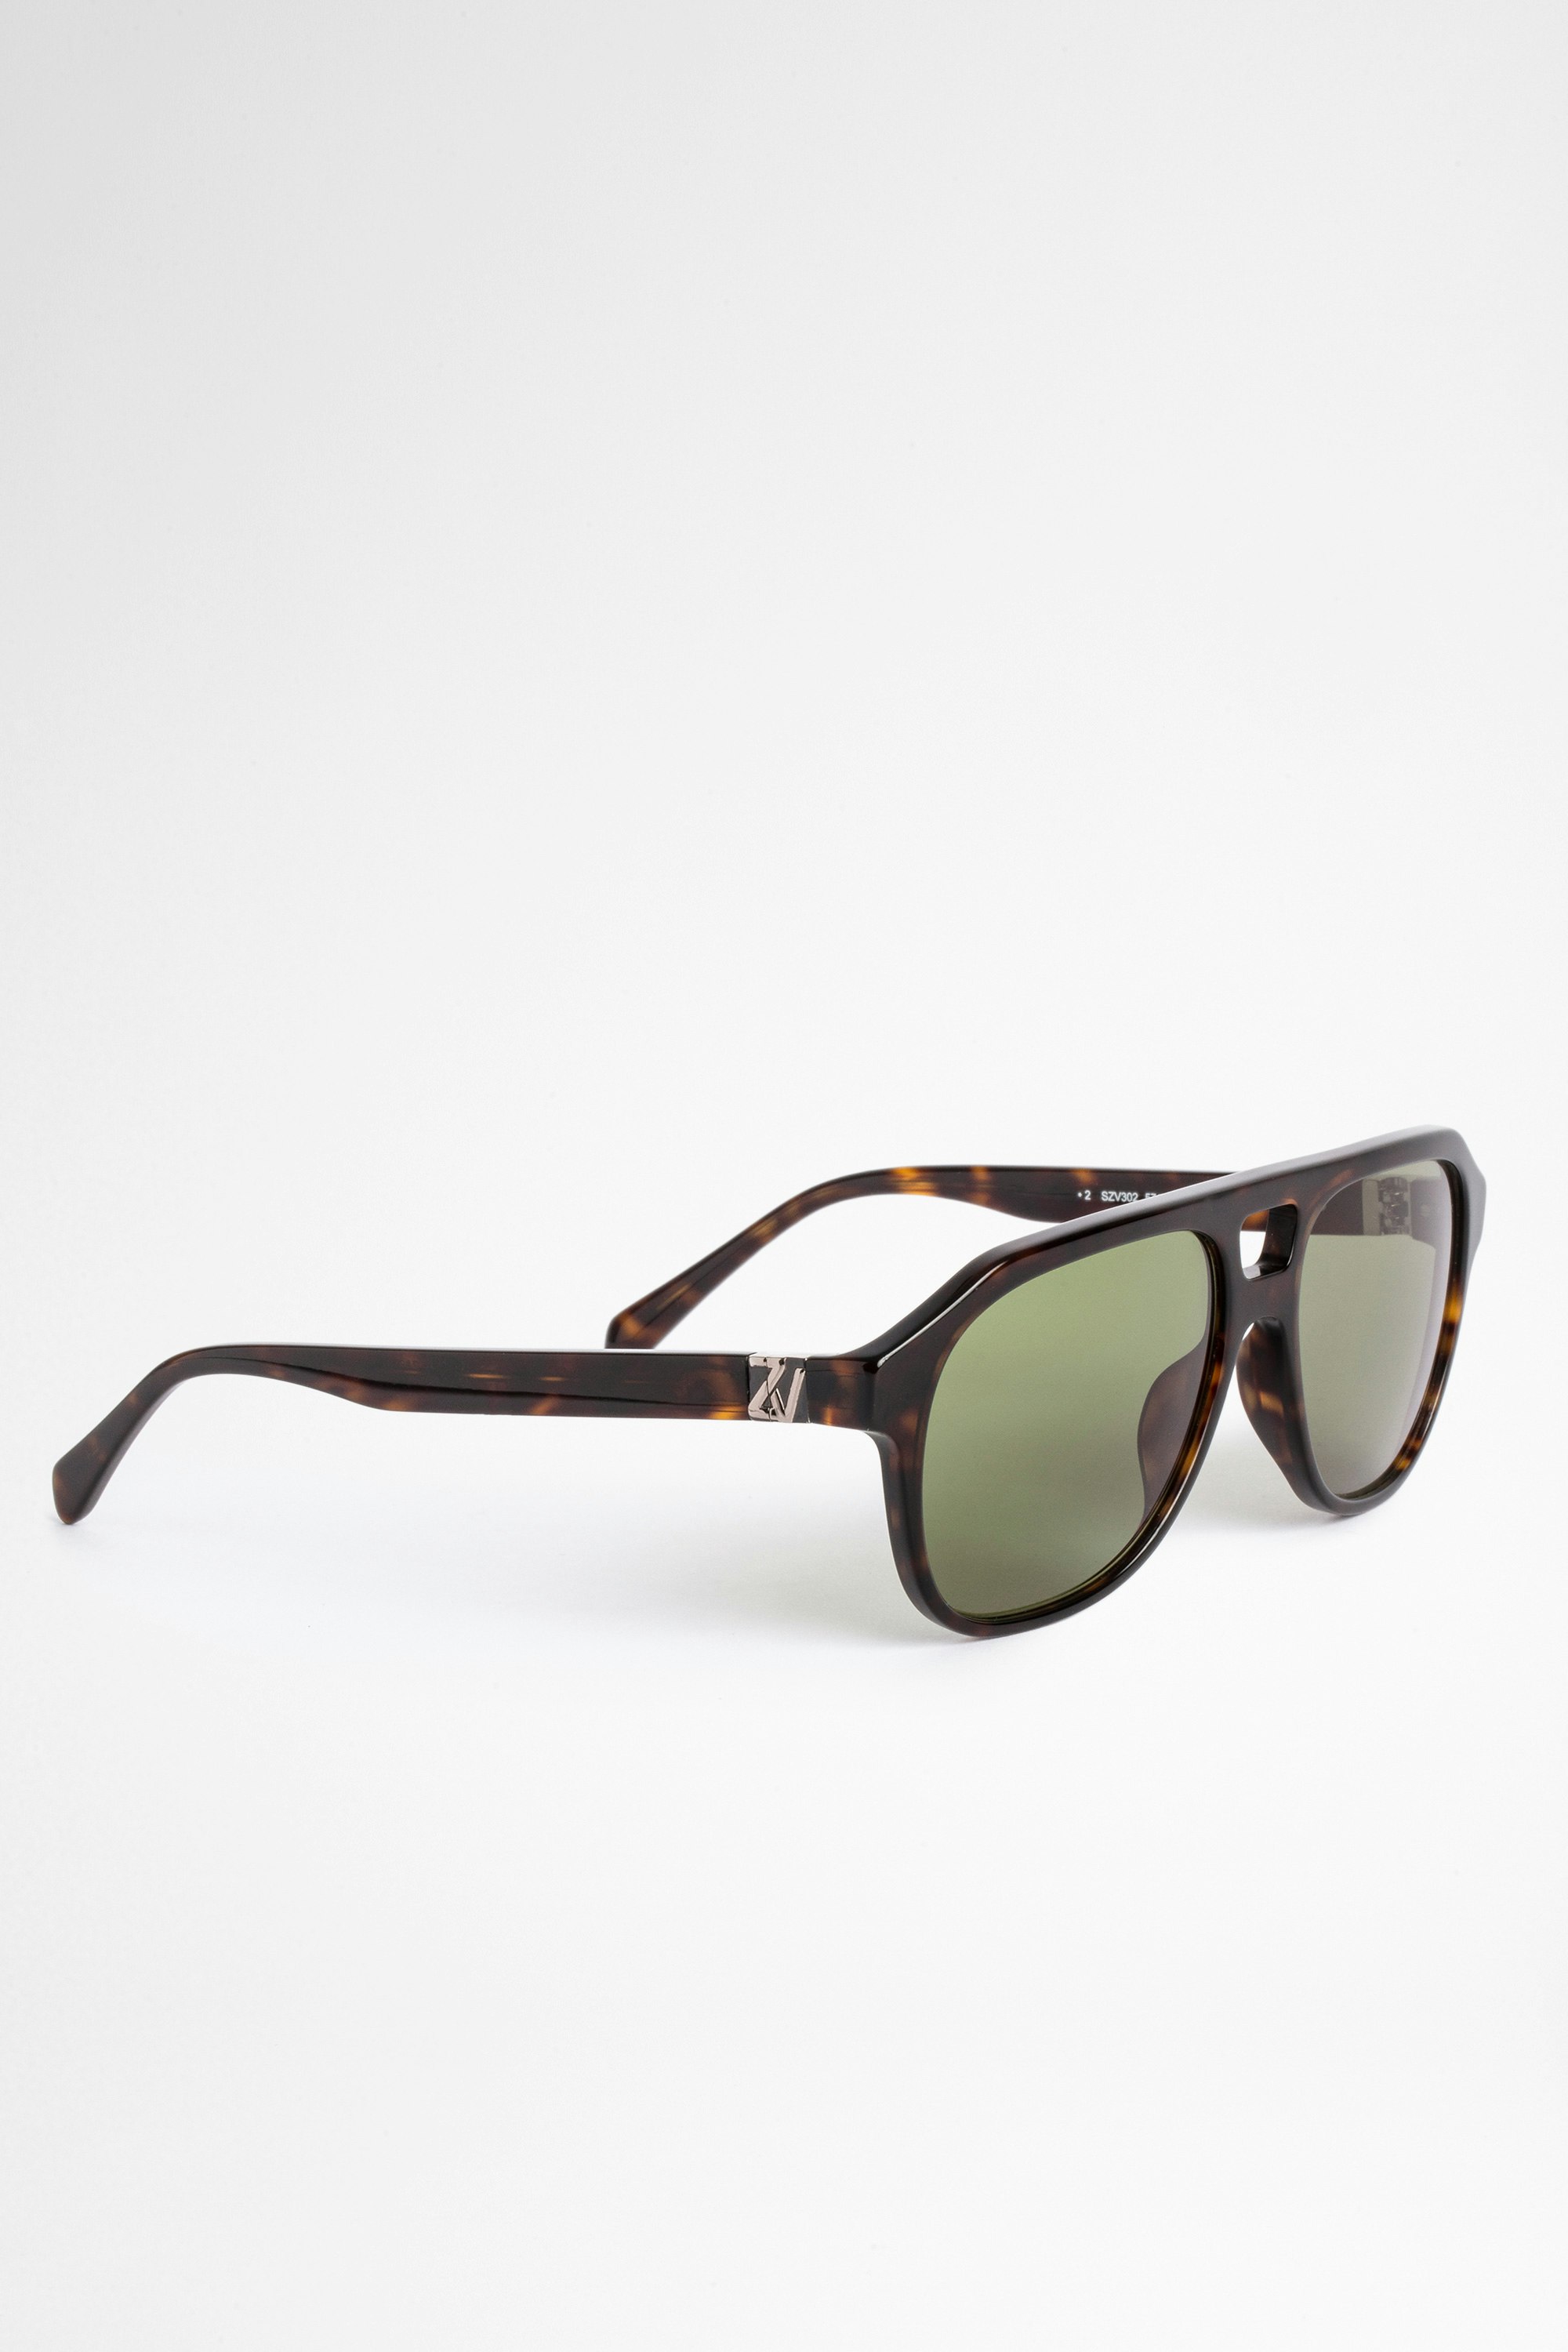 Sunglasses Shiny Unisex Zadig&Volatire acetate sunglasses in havana color.